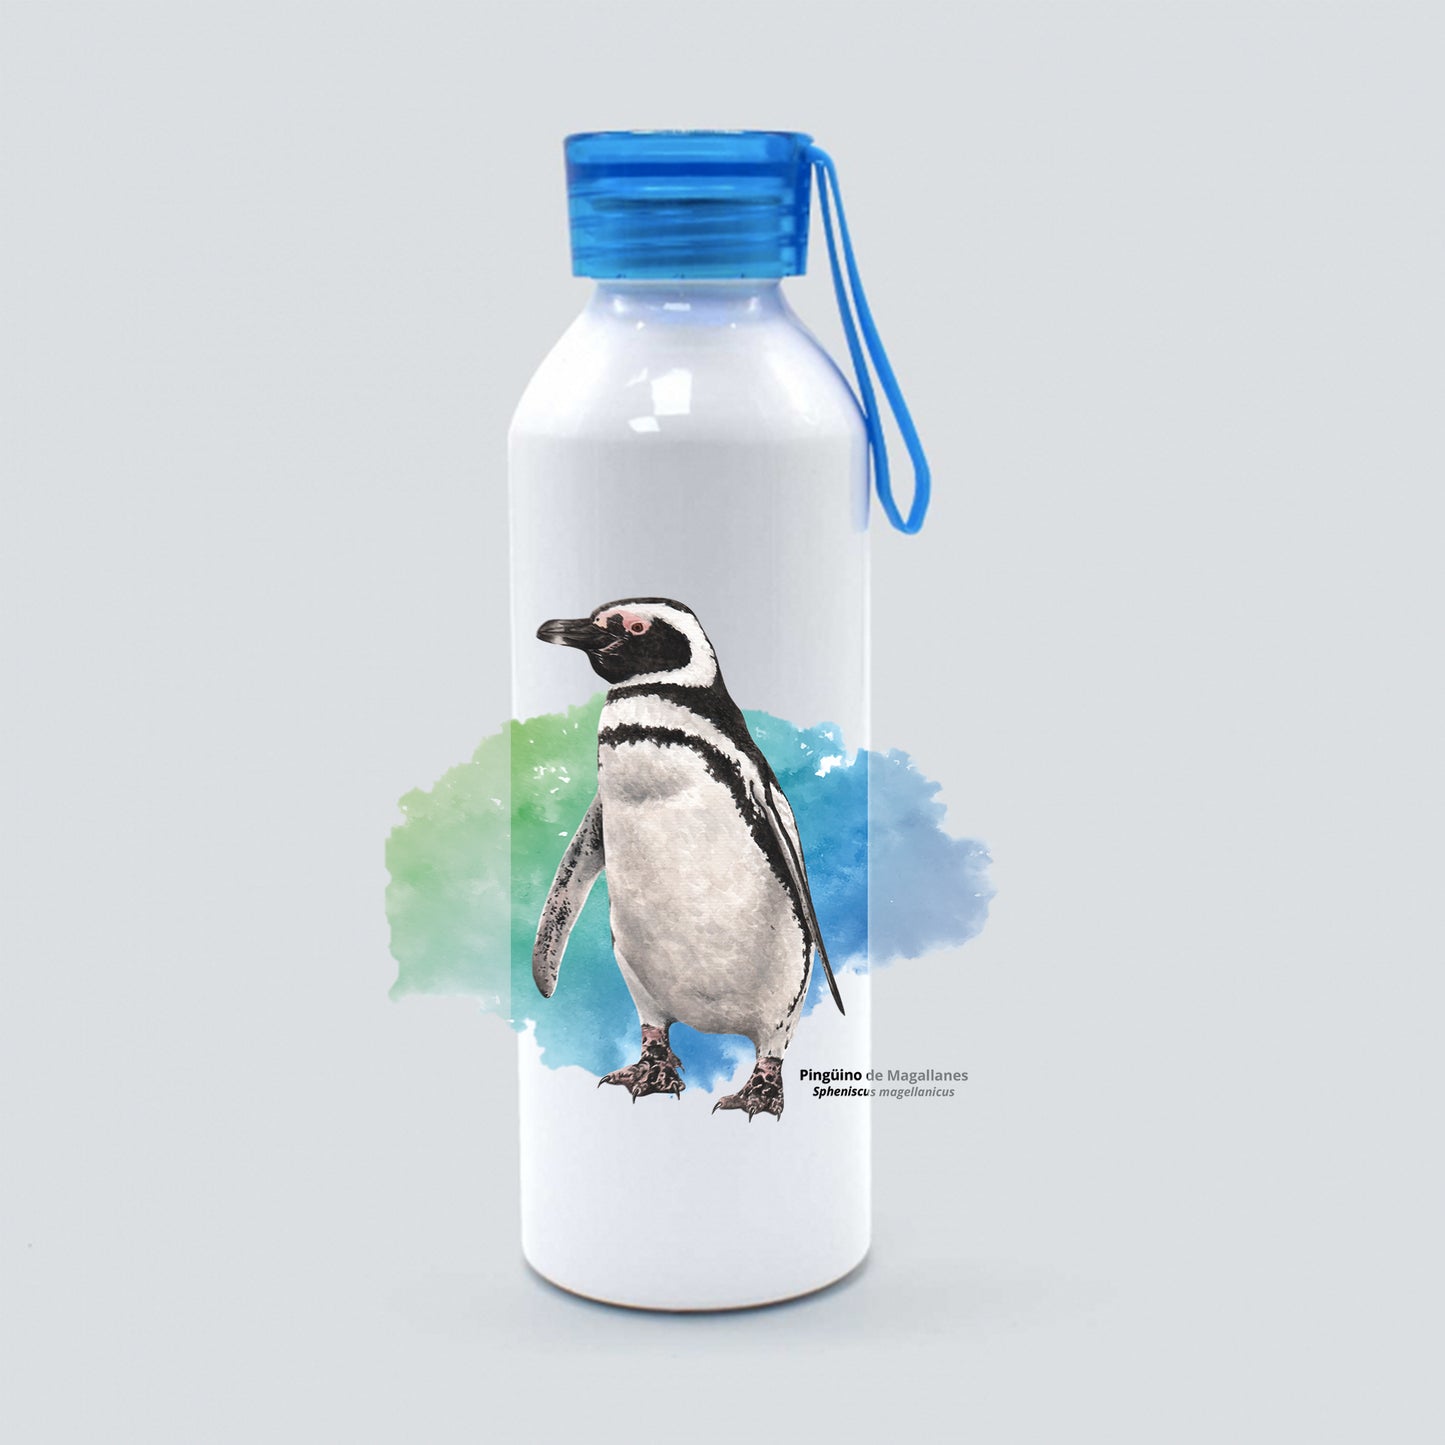 Botella Pingüino Magallánico